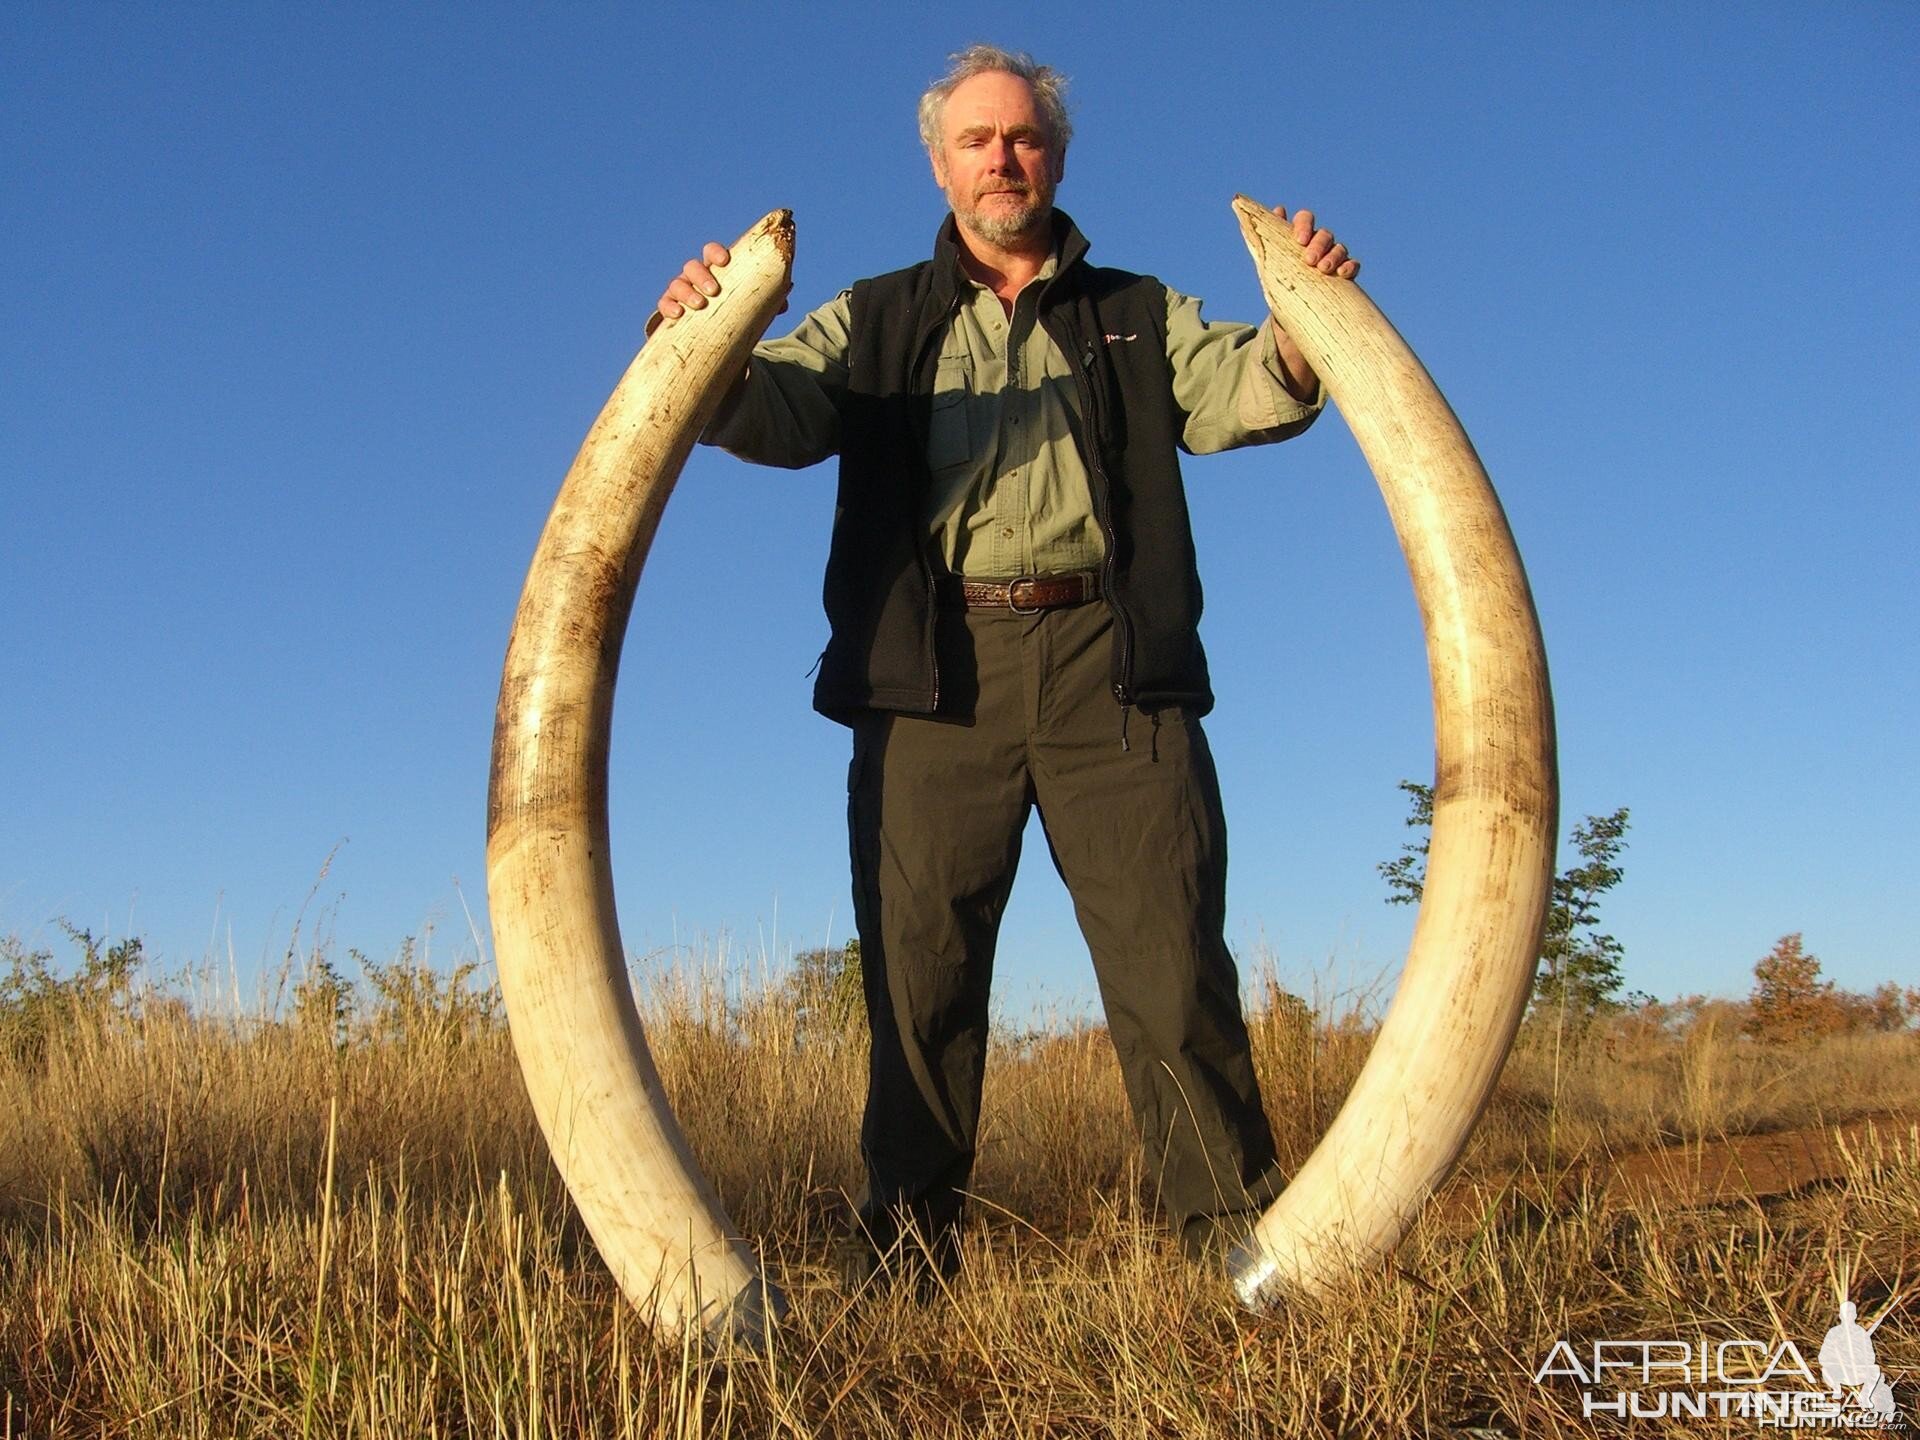 62 pound Elephant Bull